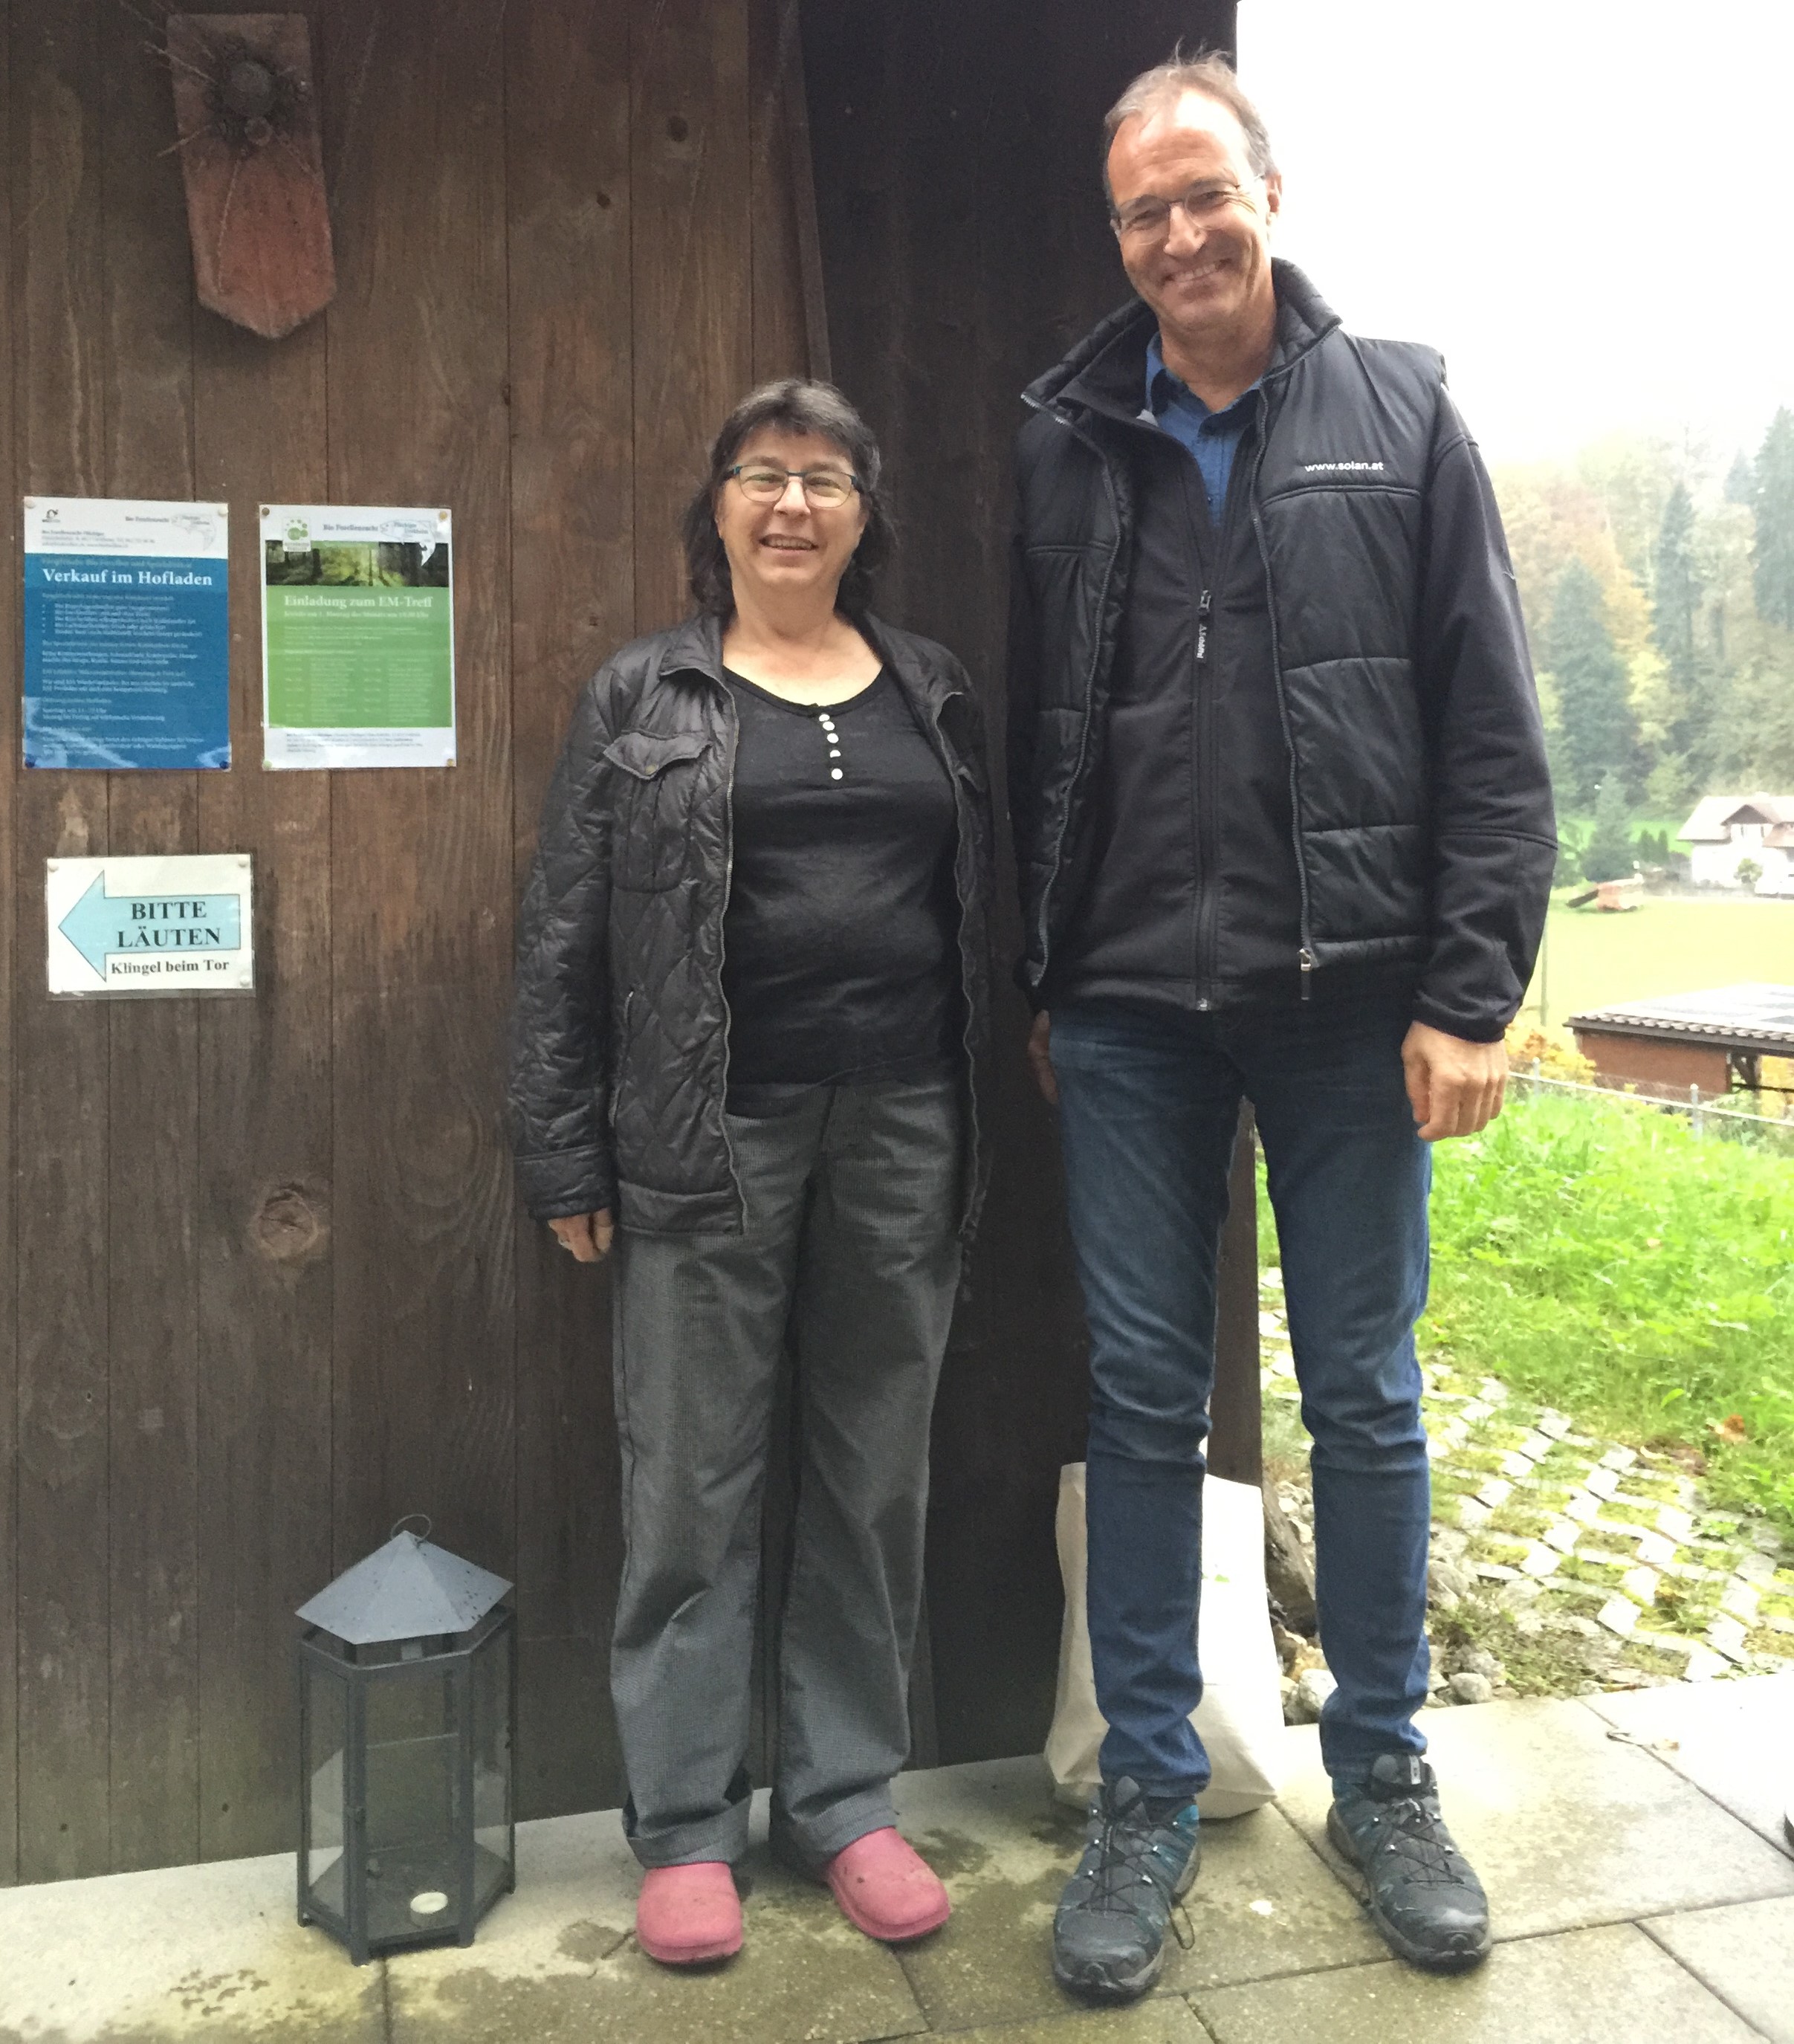 Ms. Susanne Flückiger, the farm owner (left) and Mr. Ueli Rothenbühler from EM Schweiz AG (right)